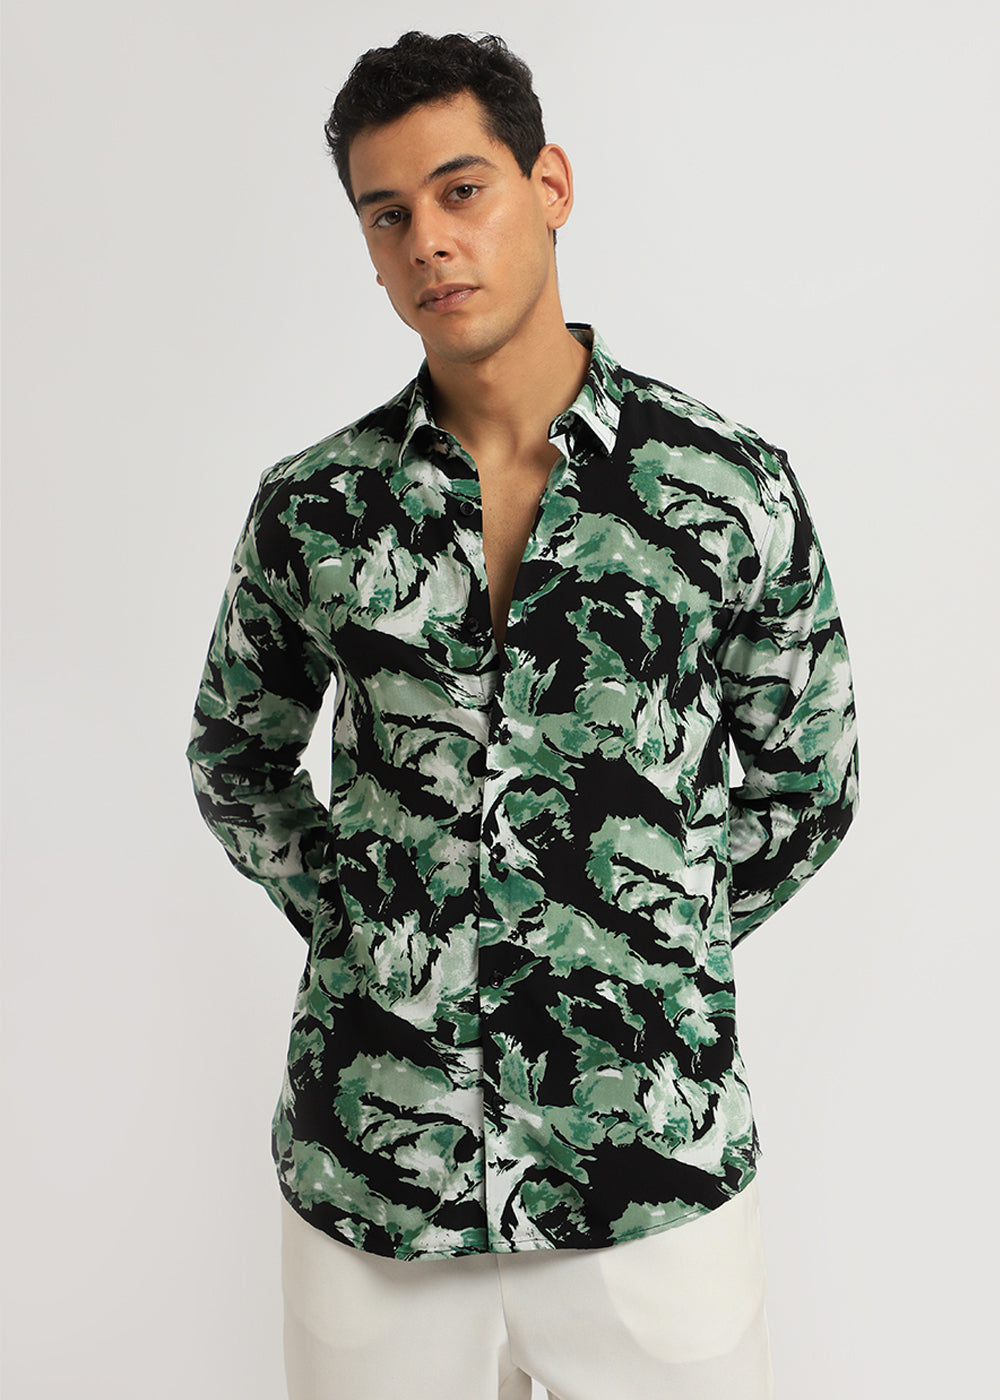 Smoke Green Print Full sleeve shirt